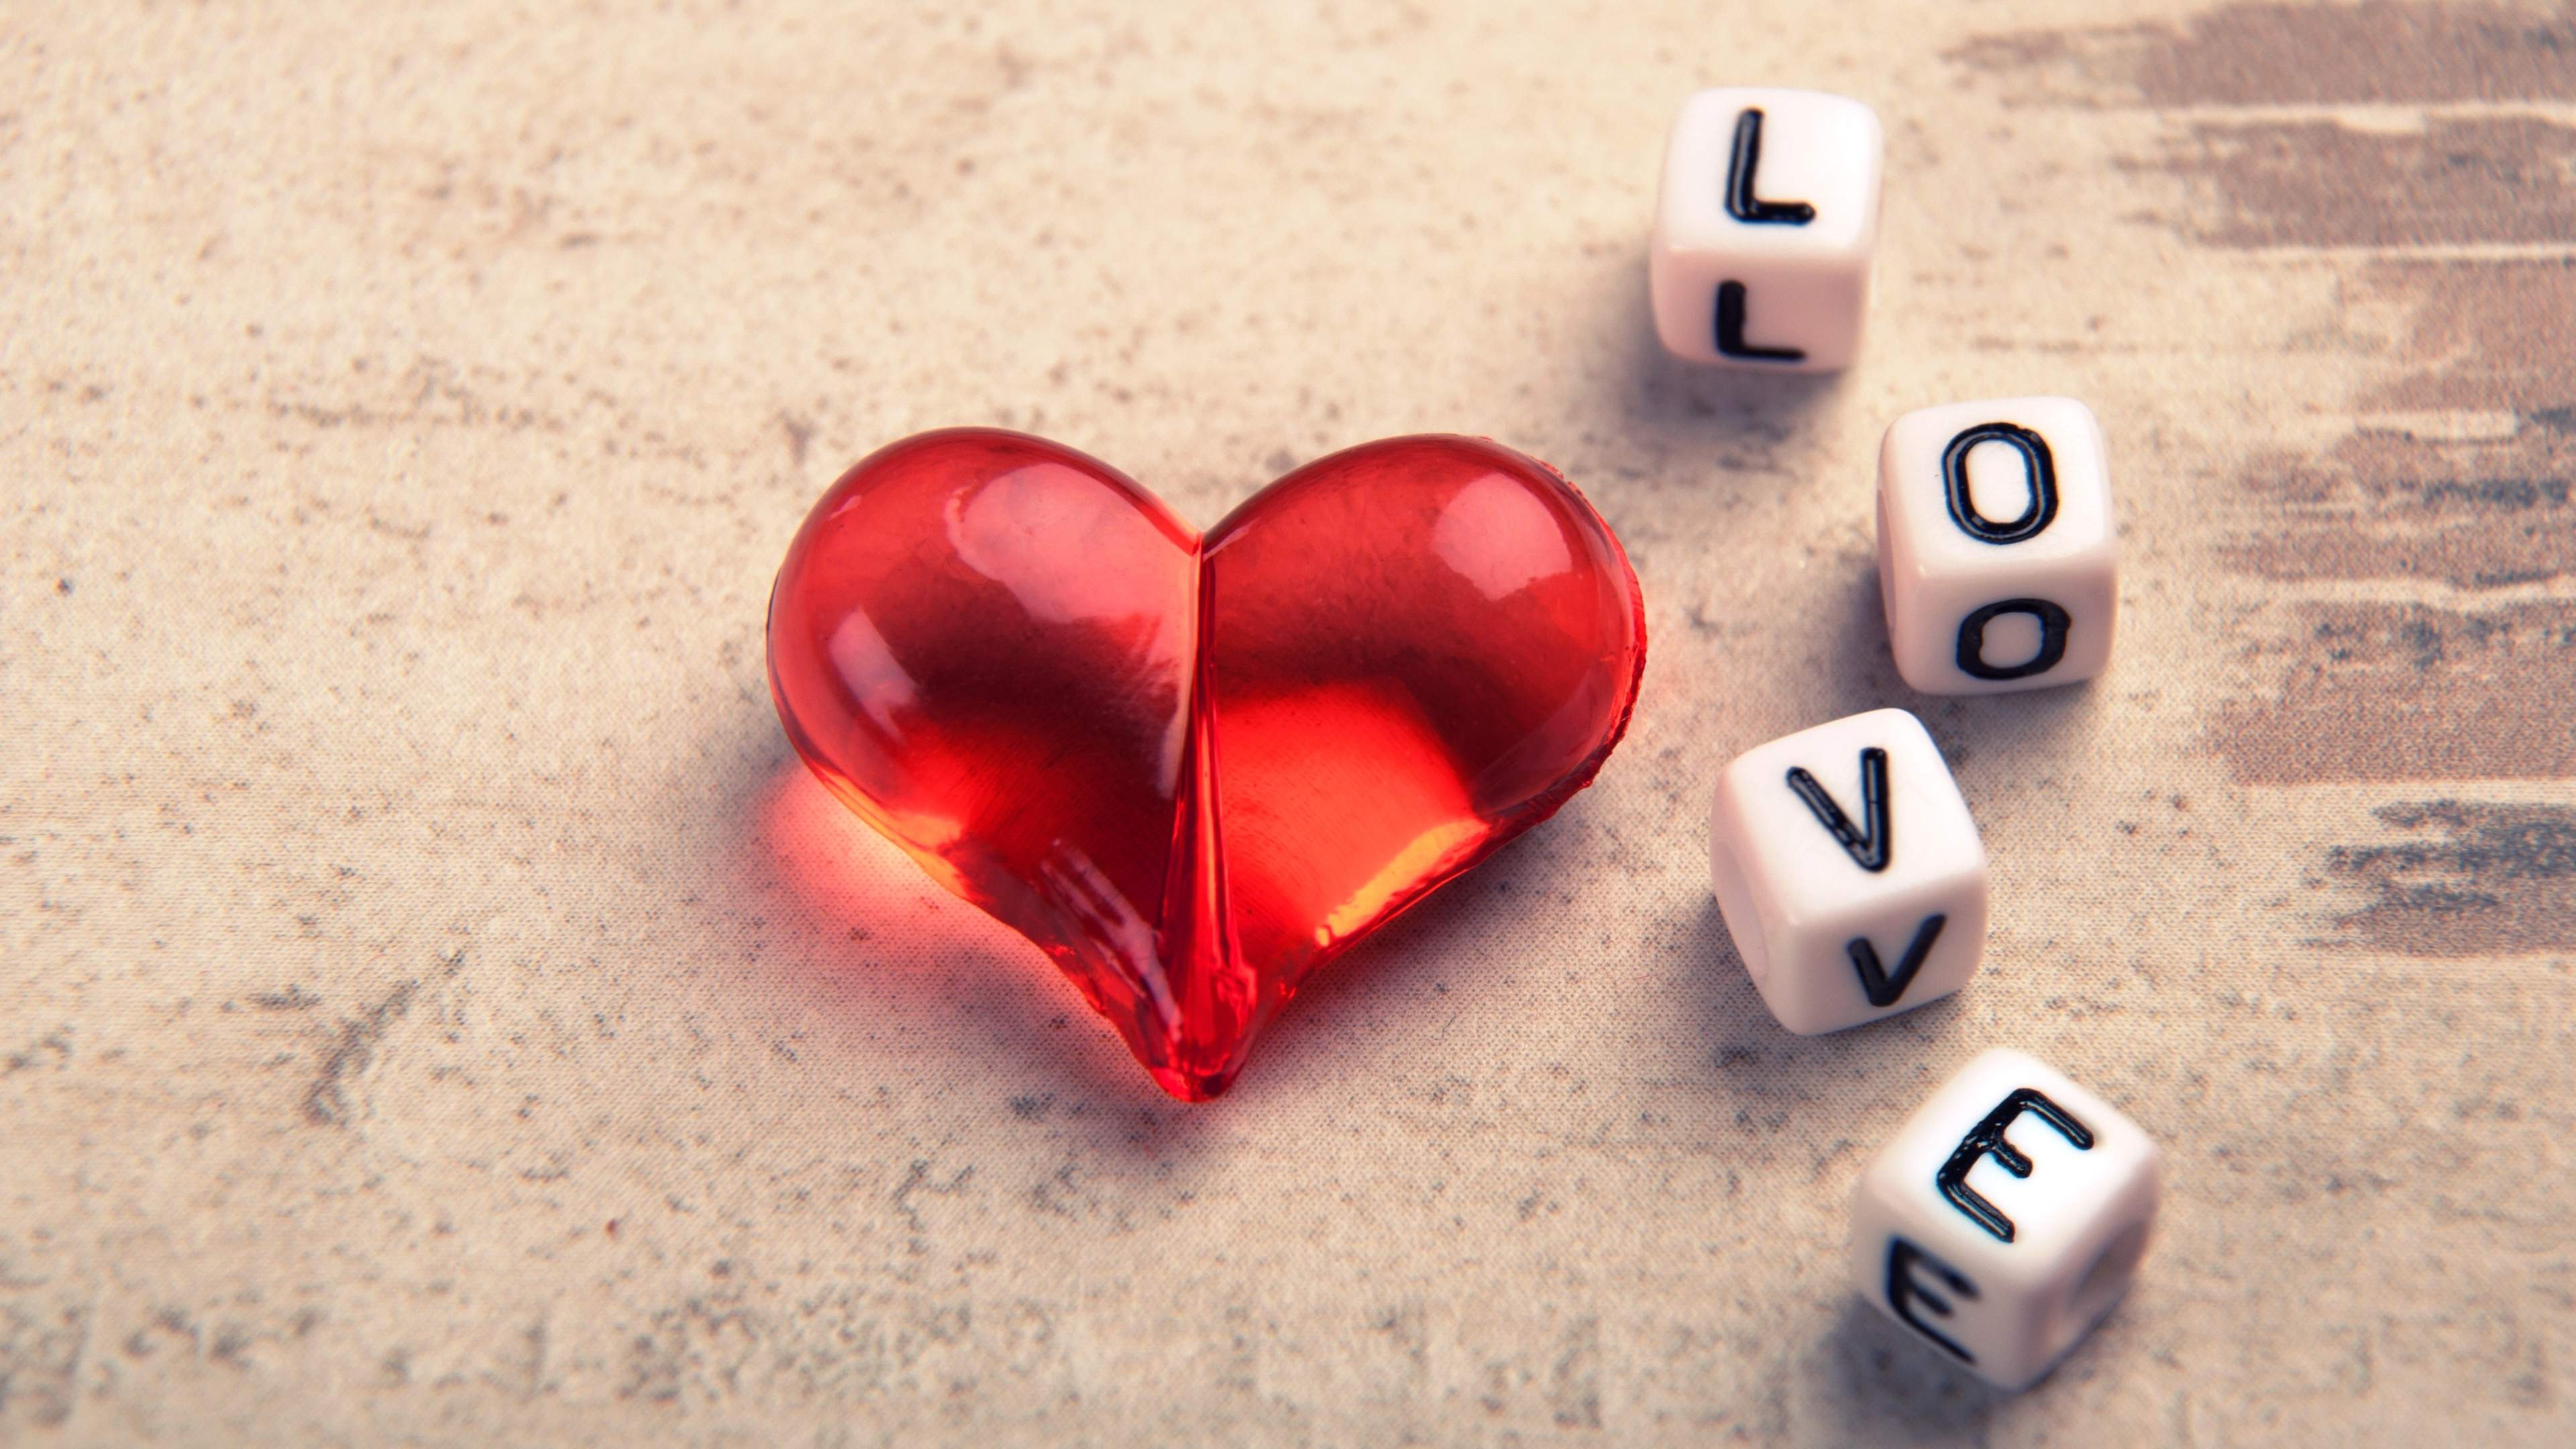 wallpaper hd love,games,love,red,heart,dice